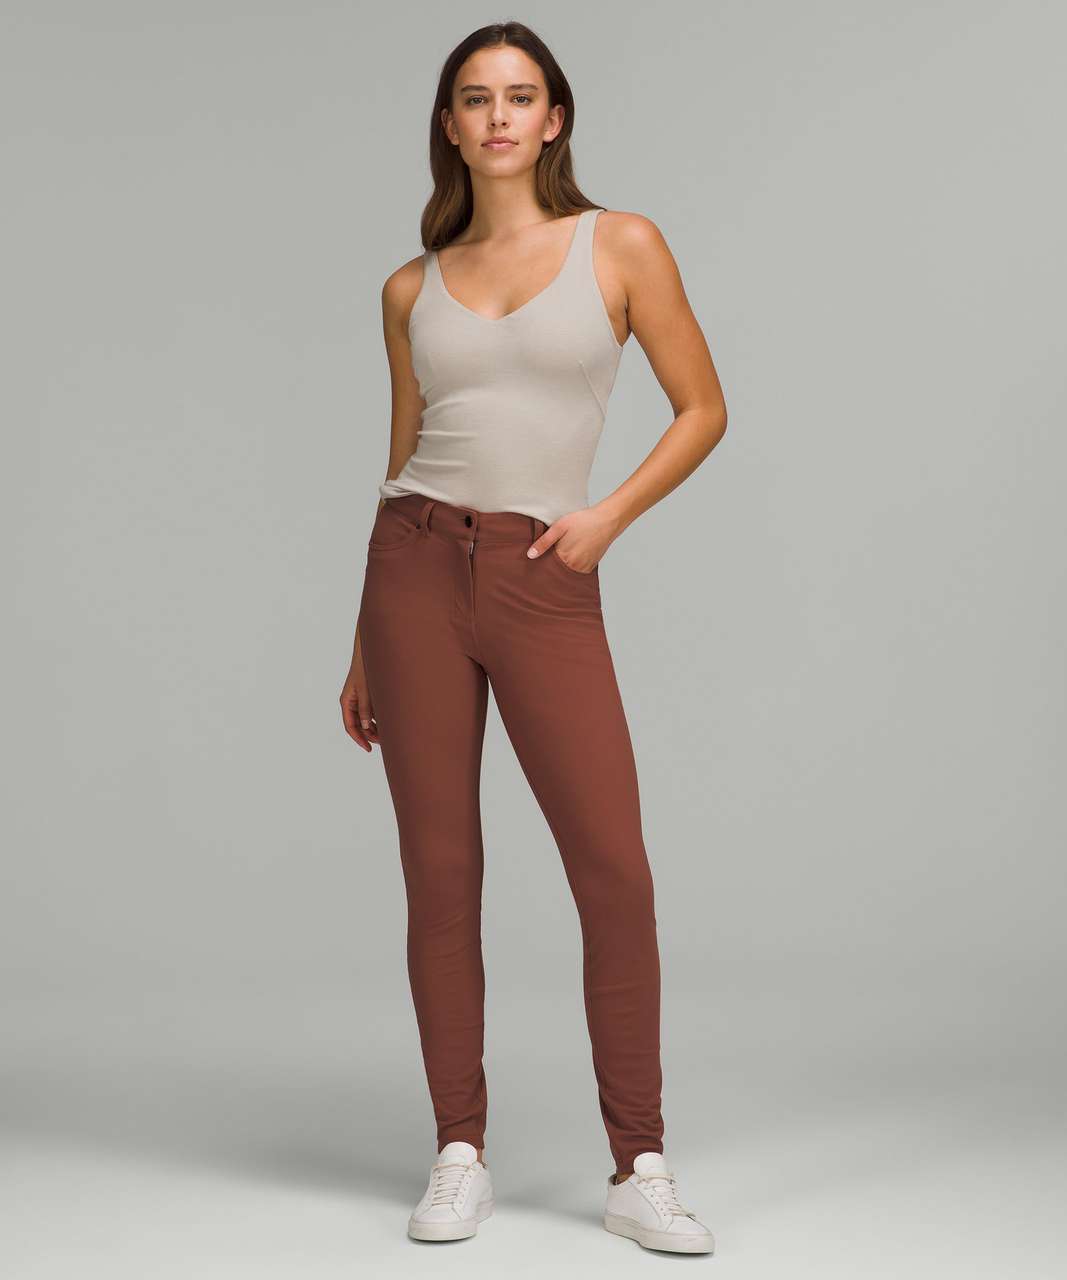 Lululemon City Sleek Slim-Fit 5 Pocket High-Rise Pant - Grey Sage